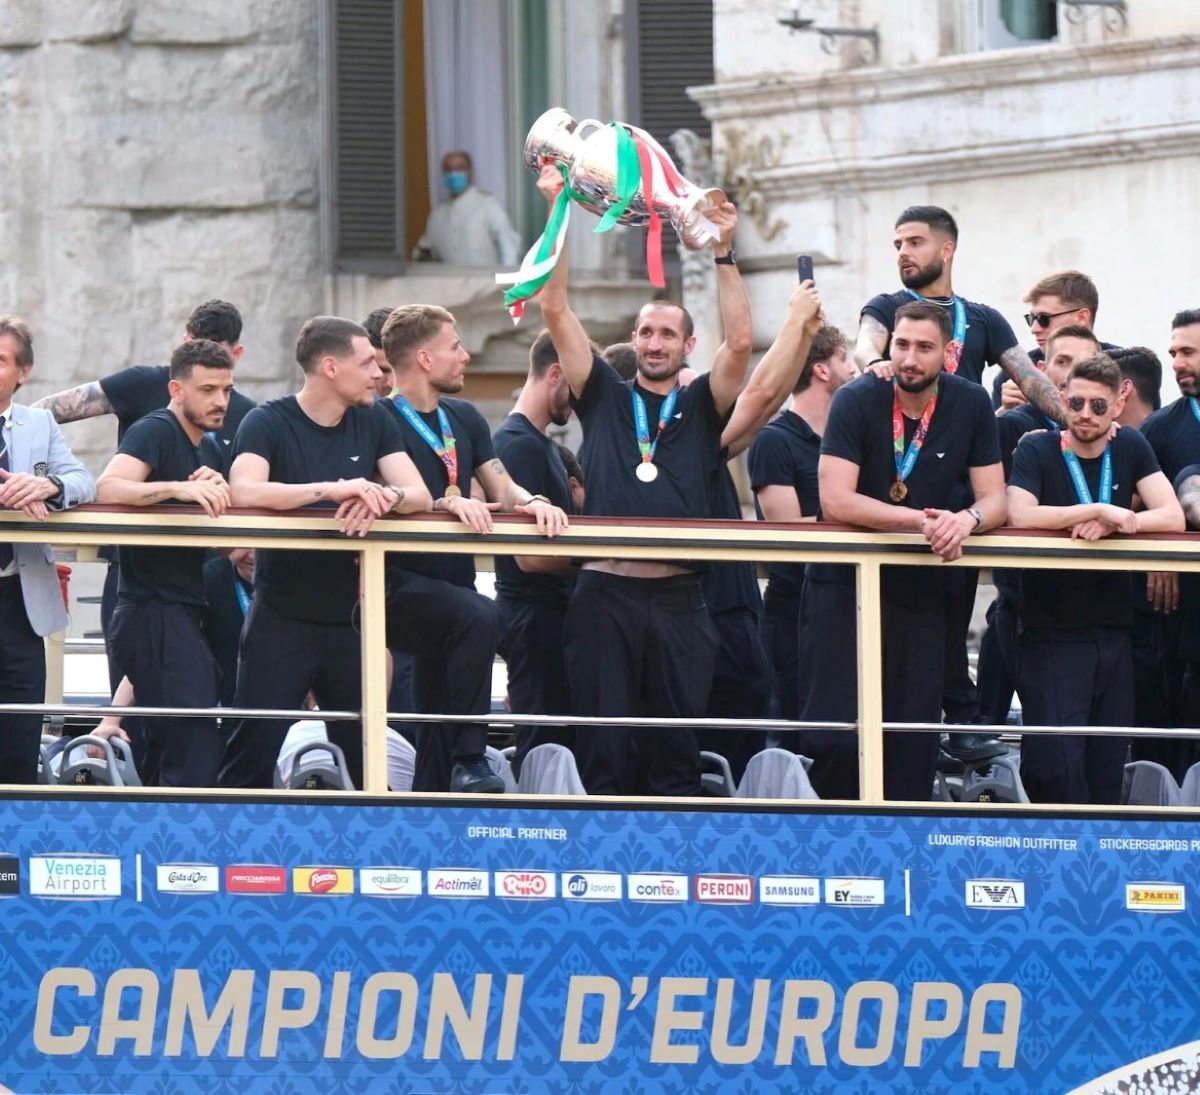 Italia Inghilterra Tifosi Inglesi Raccolta Fondi Acquisto Coppa Europei